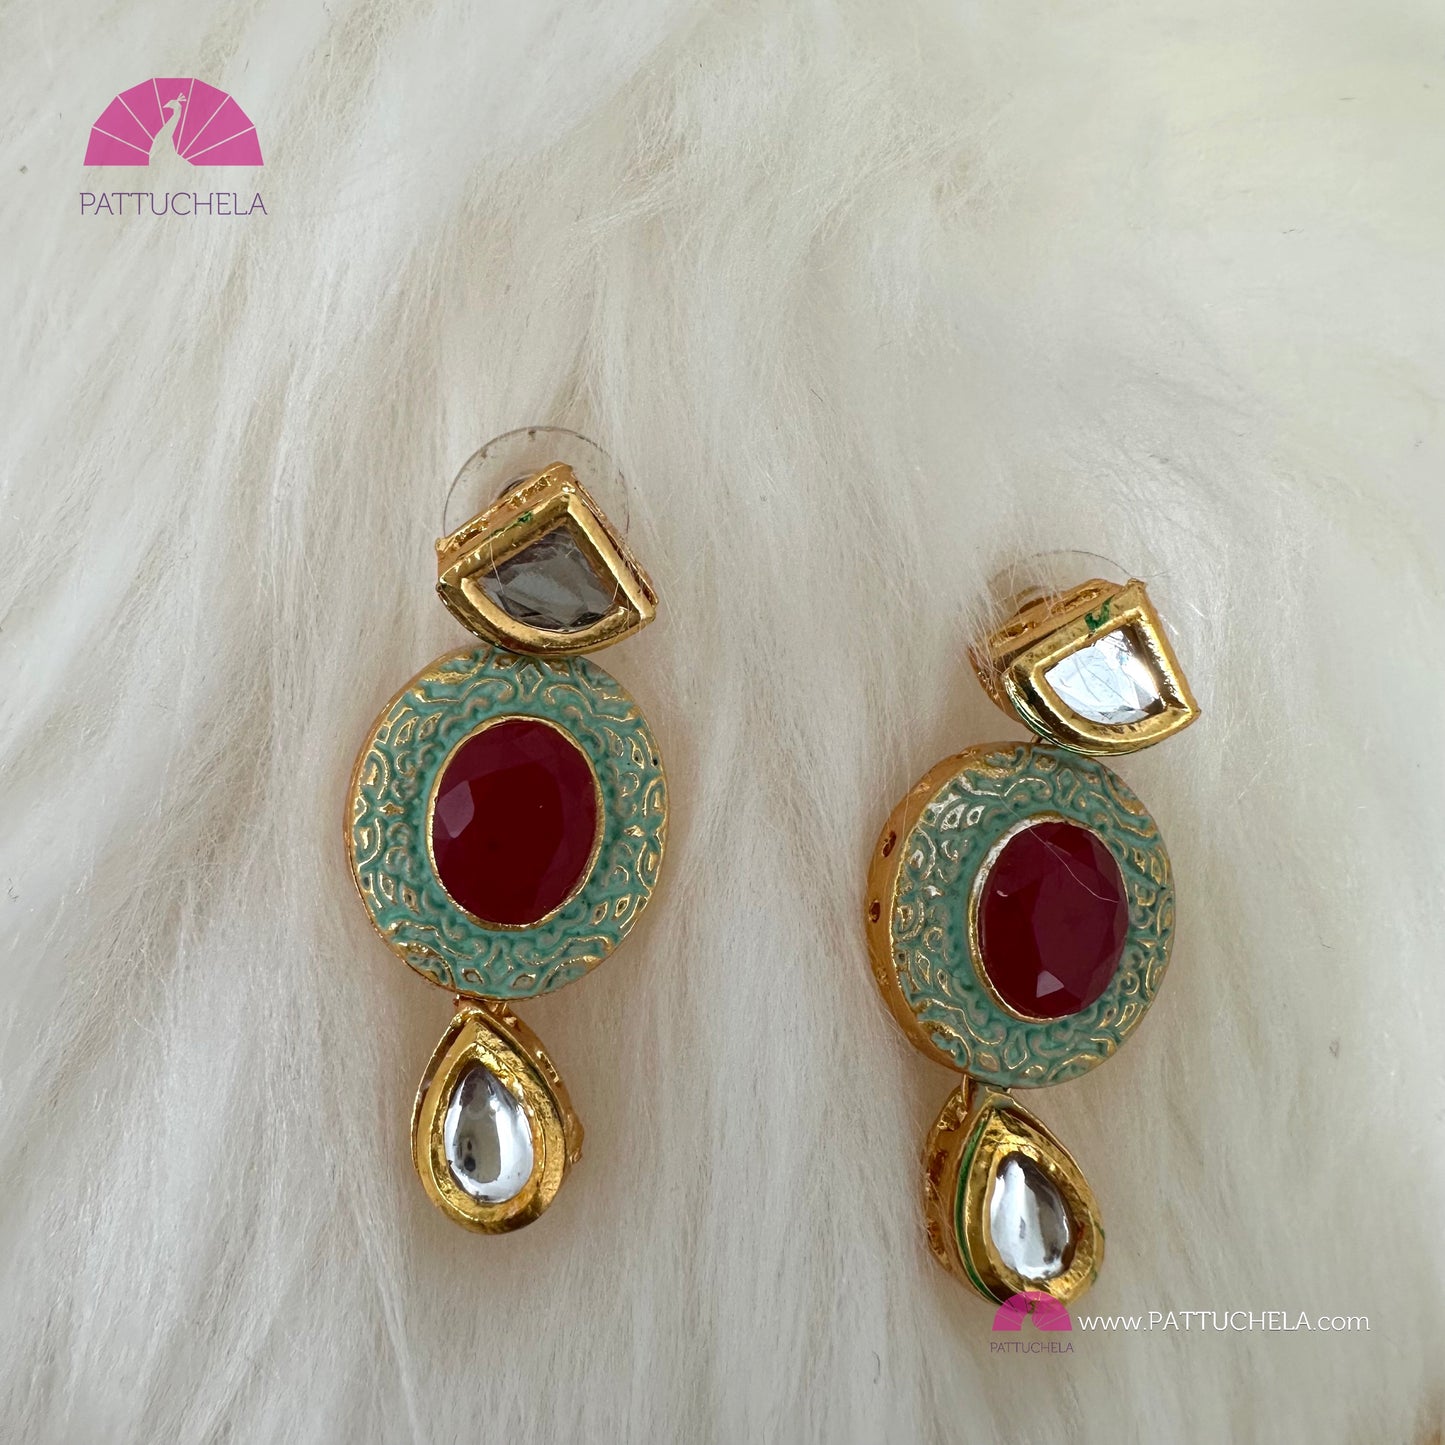 Green Enamel Kundan Chocker Necklace Set with Red Cut Stones | Fancy Jewelry | Indian Jewelry